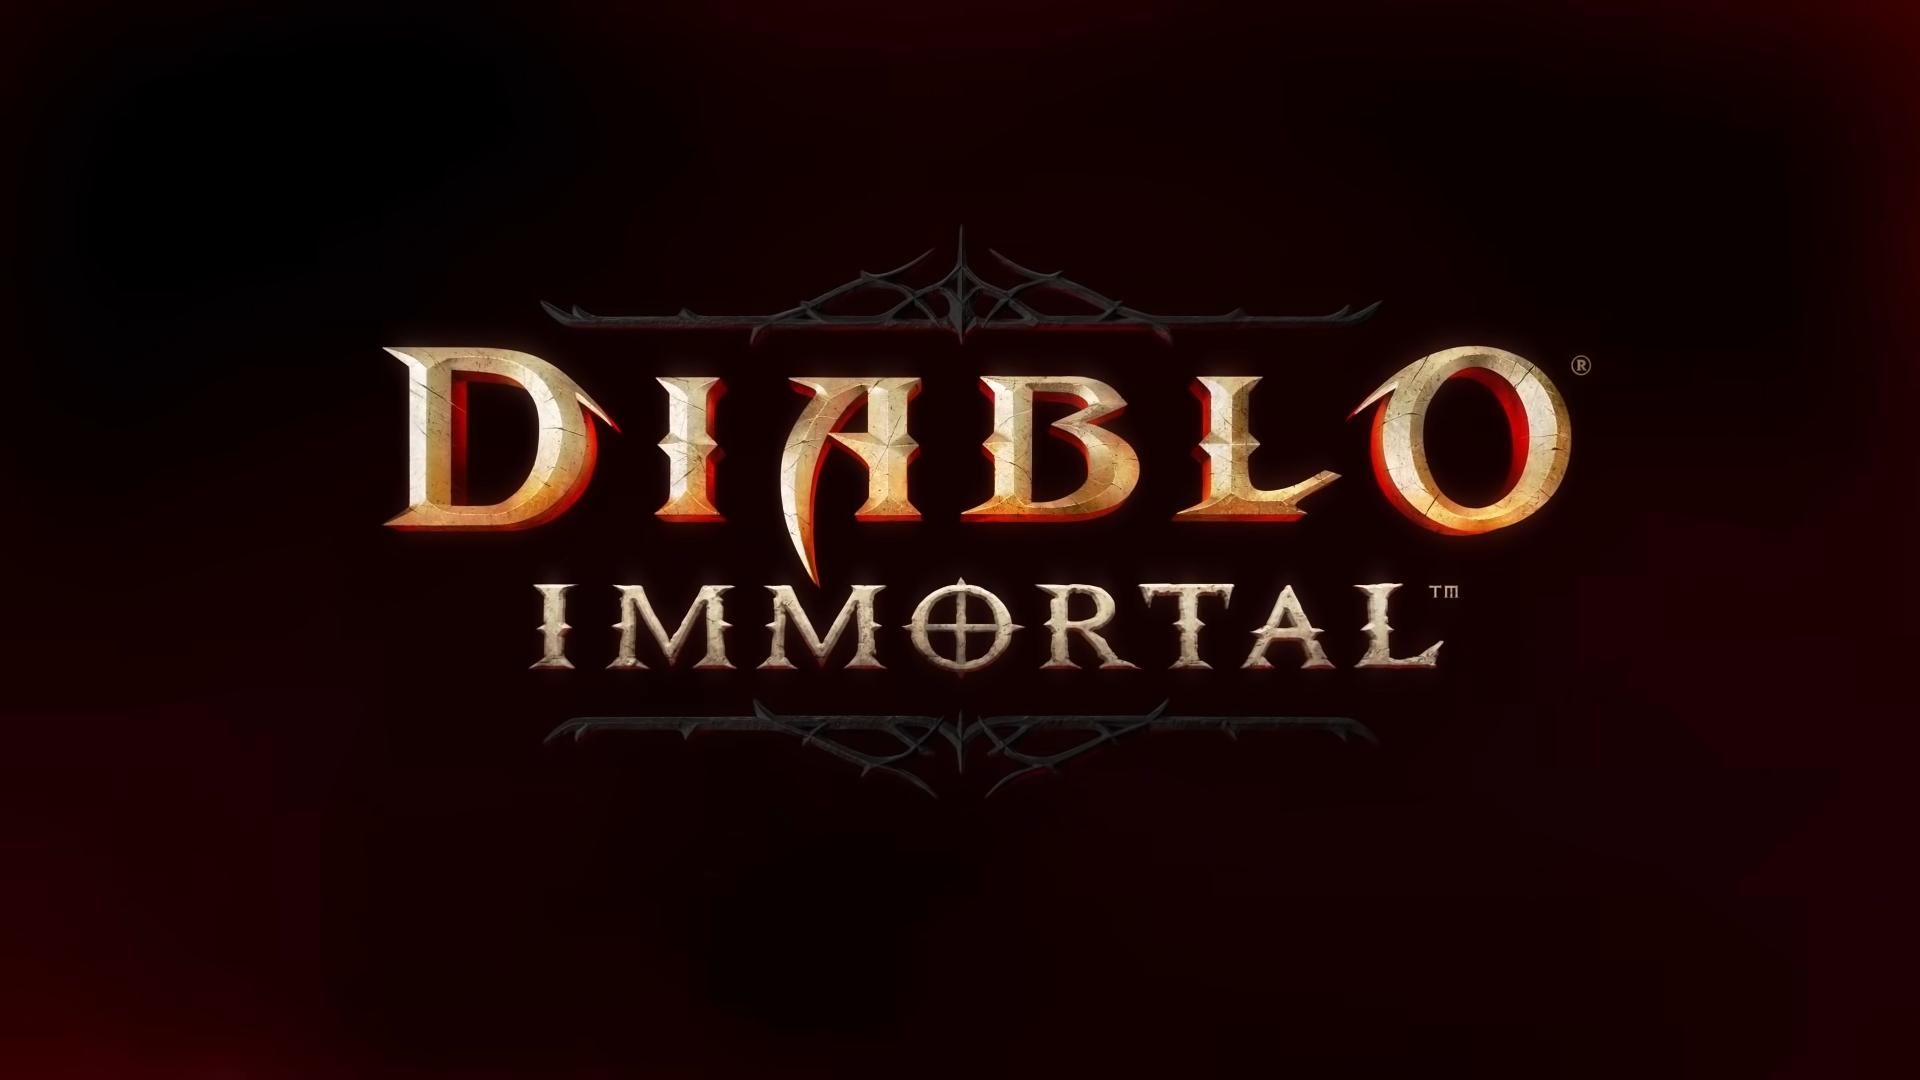 diablo immortal release date android